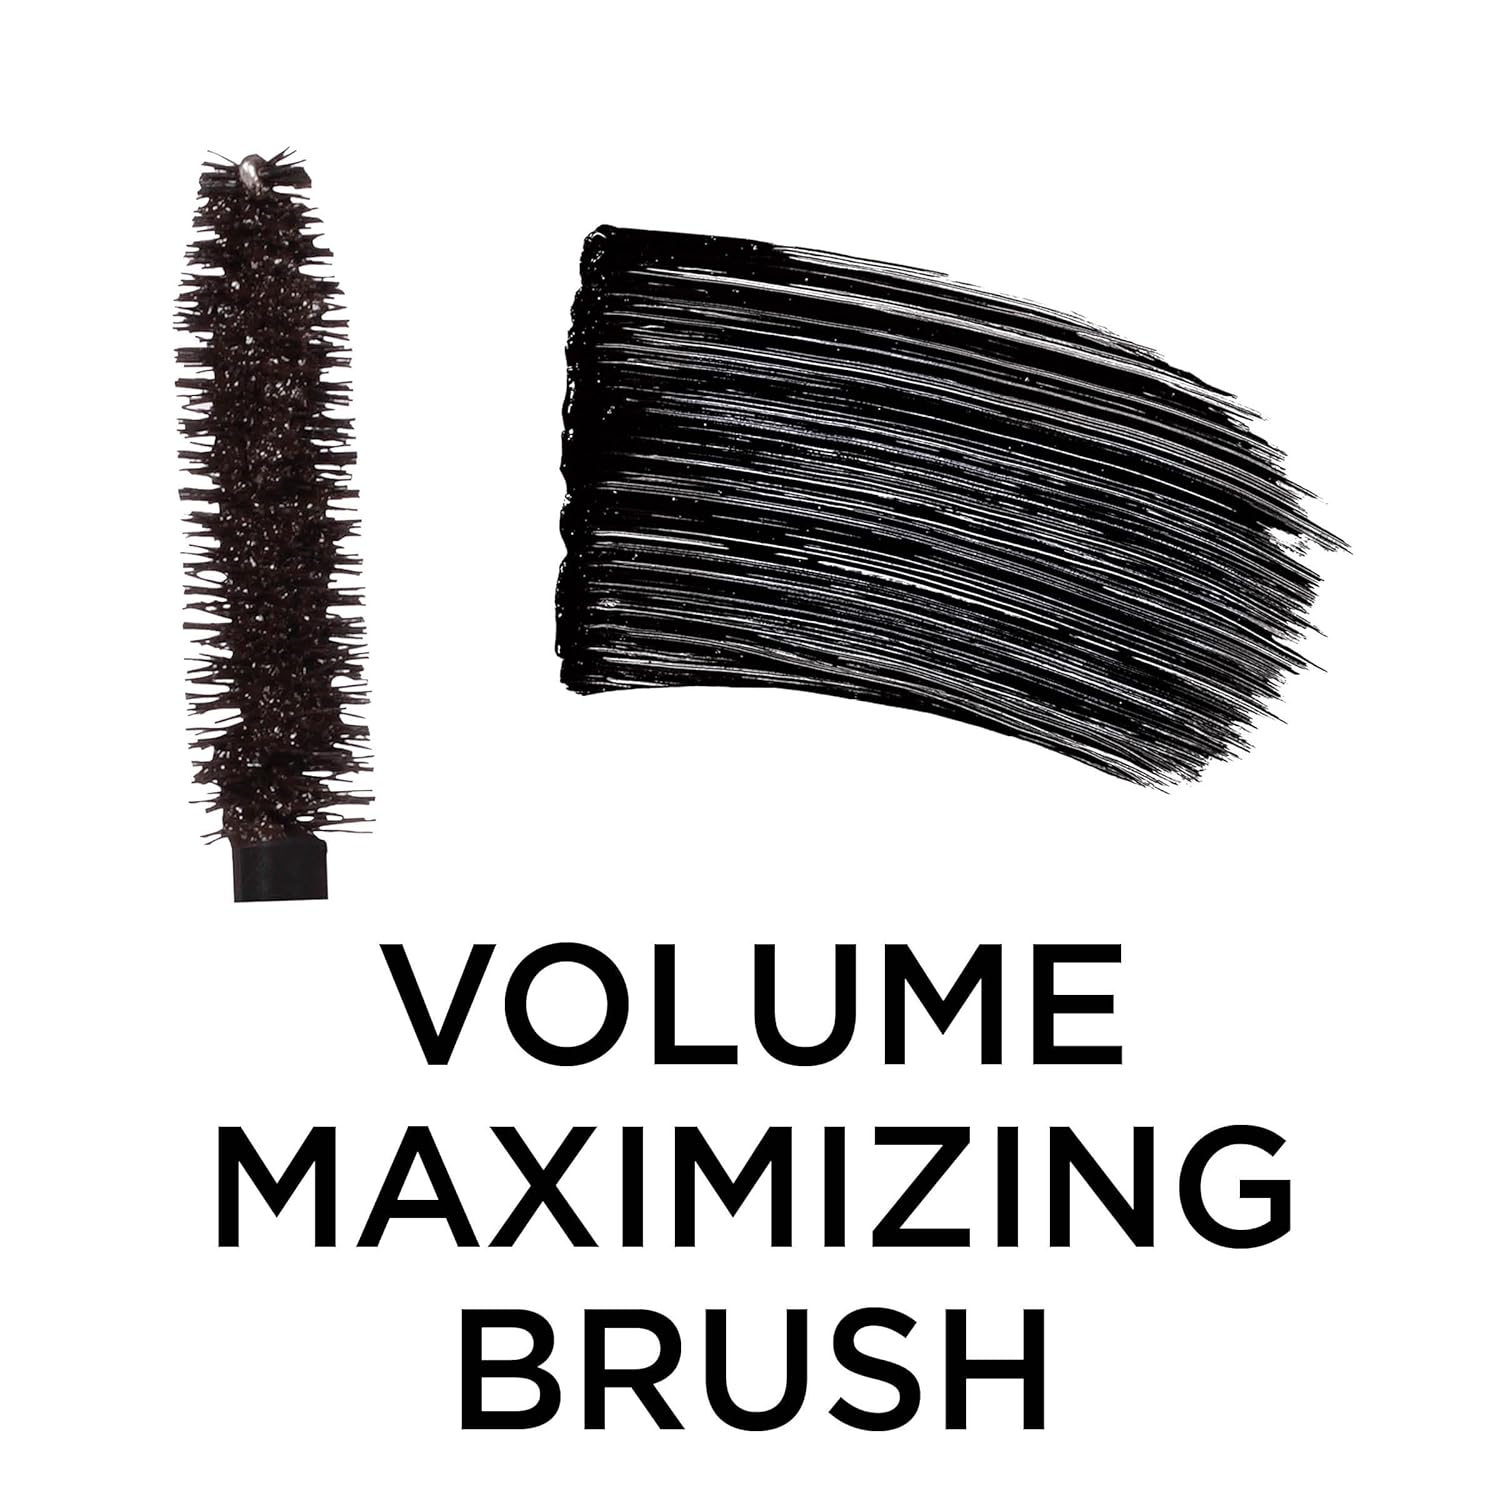 L’Oreal Paris Makeup Voluminous Original Volume Building Mascara, Carbon Black, 0.26 Fl Oz